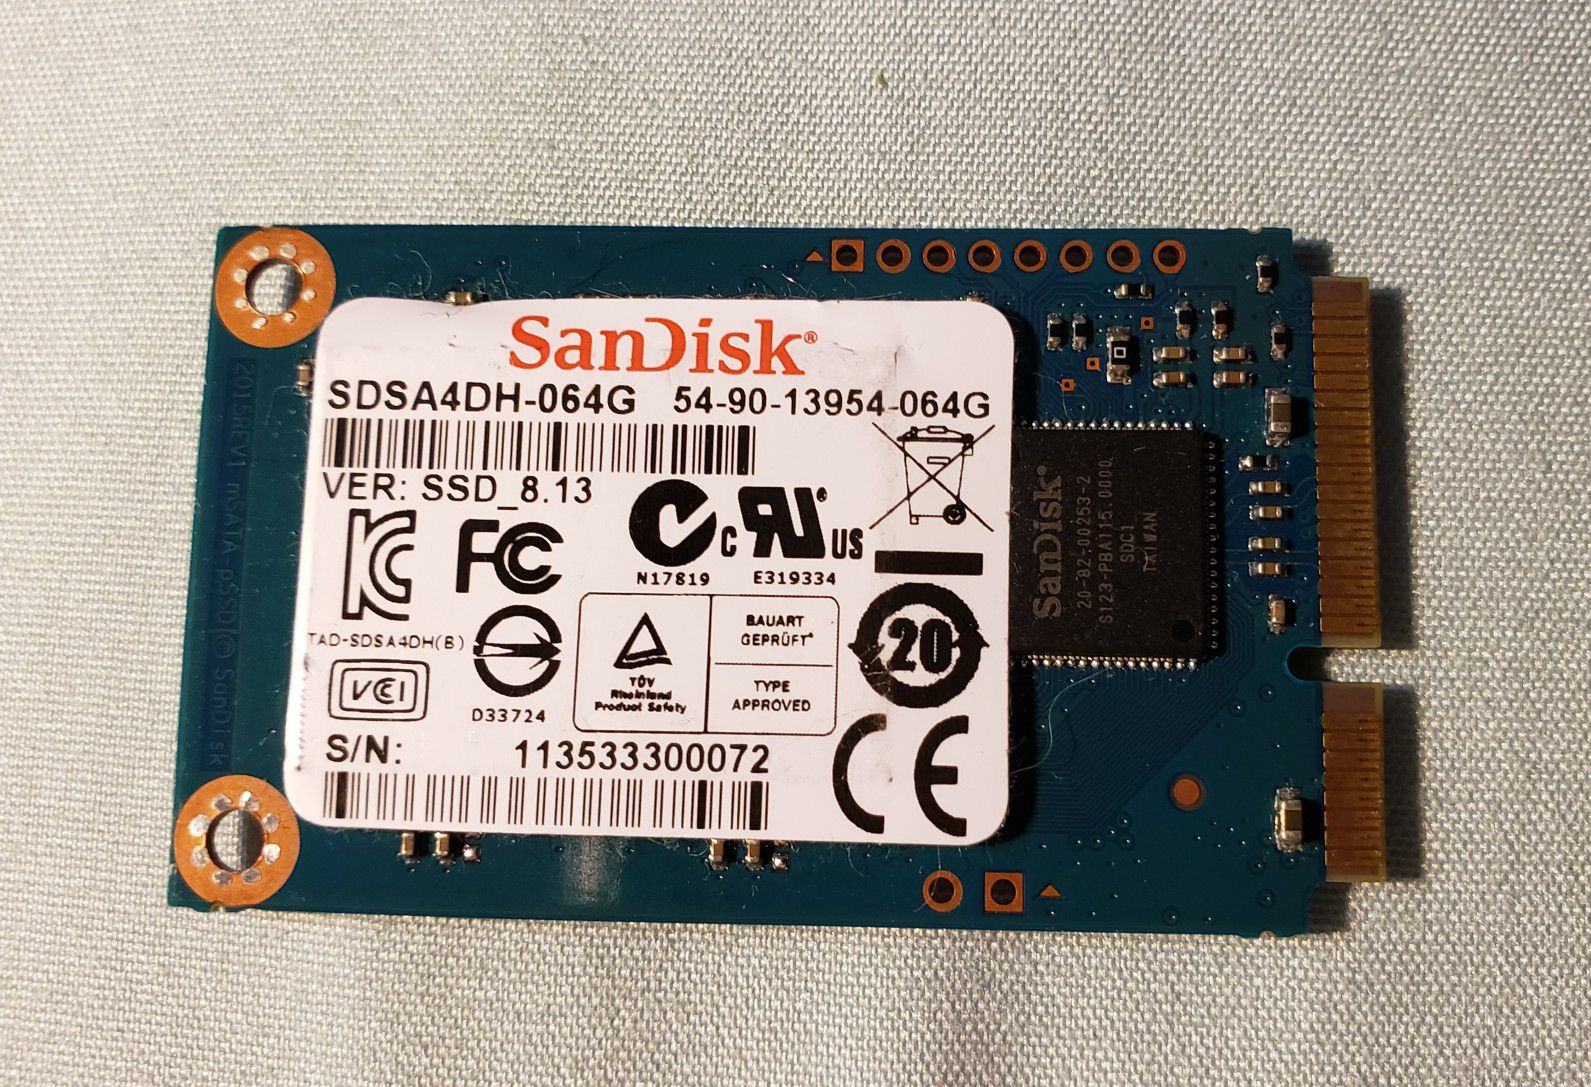 SanDisk SSD 64GB mSATA for Laptop, Notebook, Chromebook